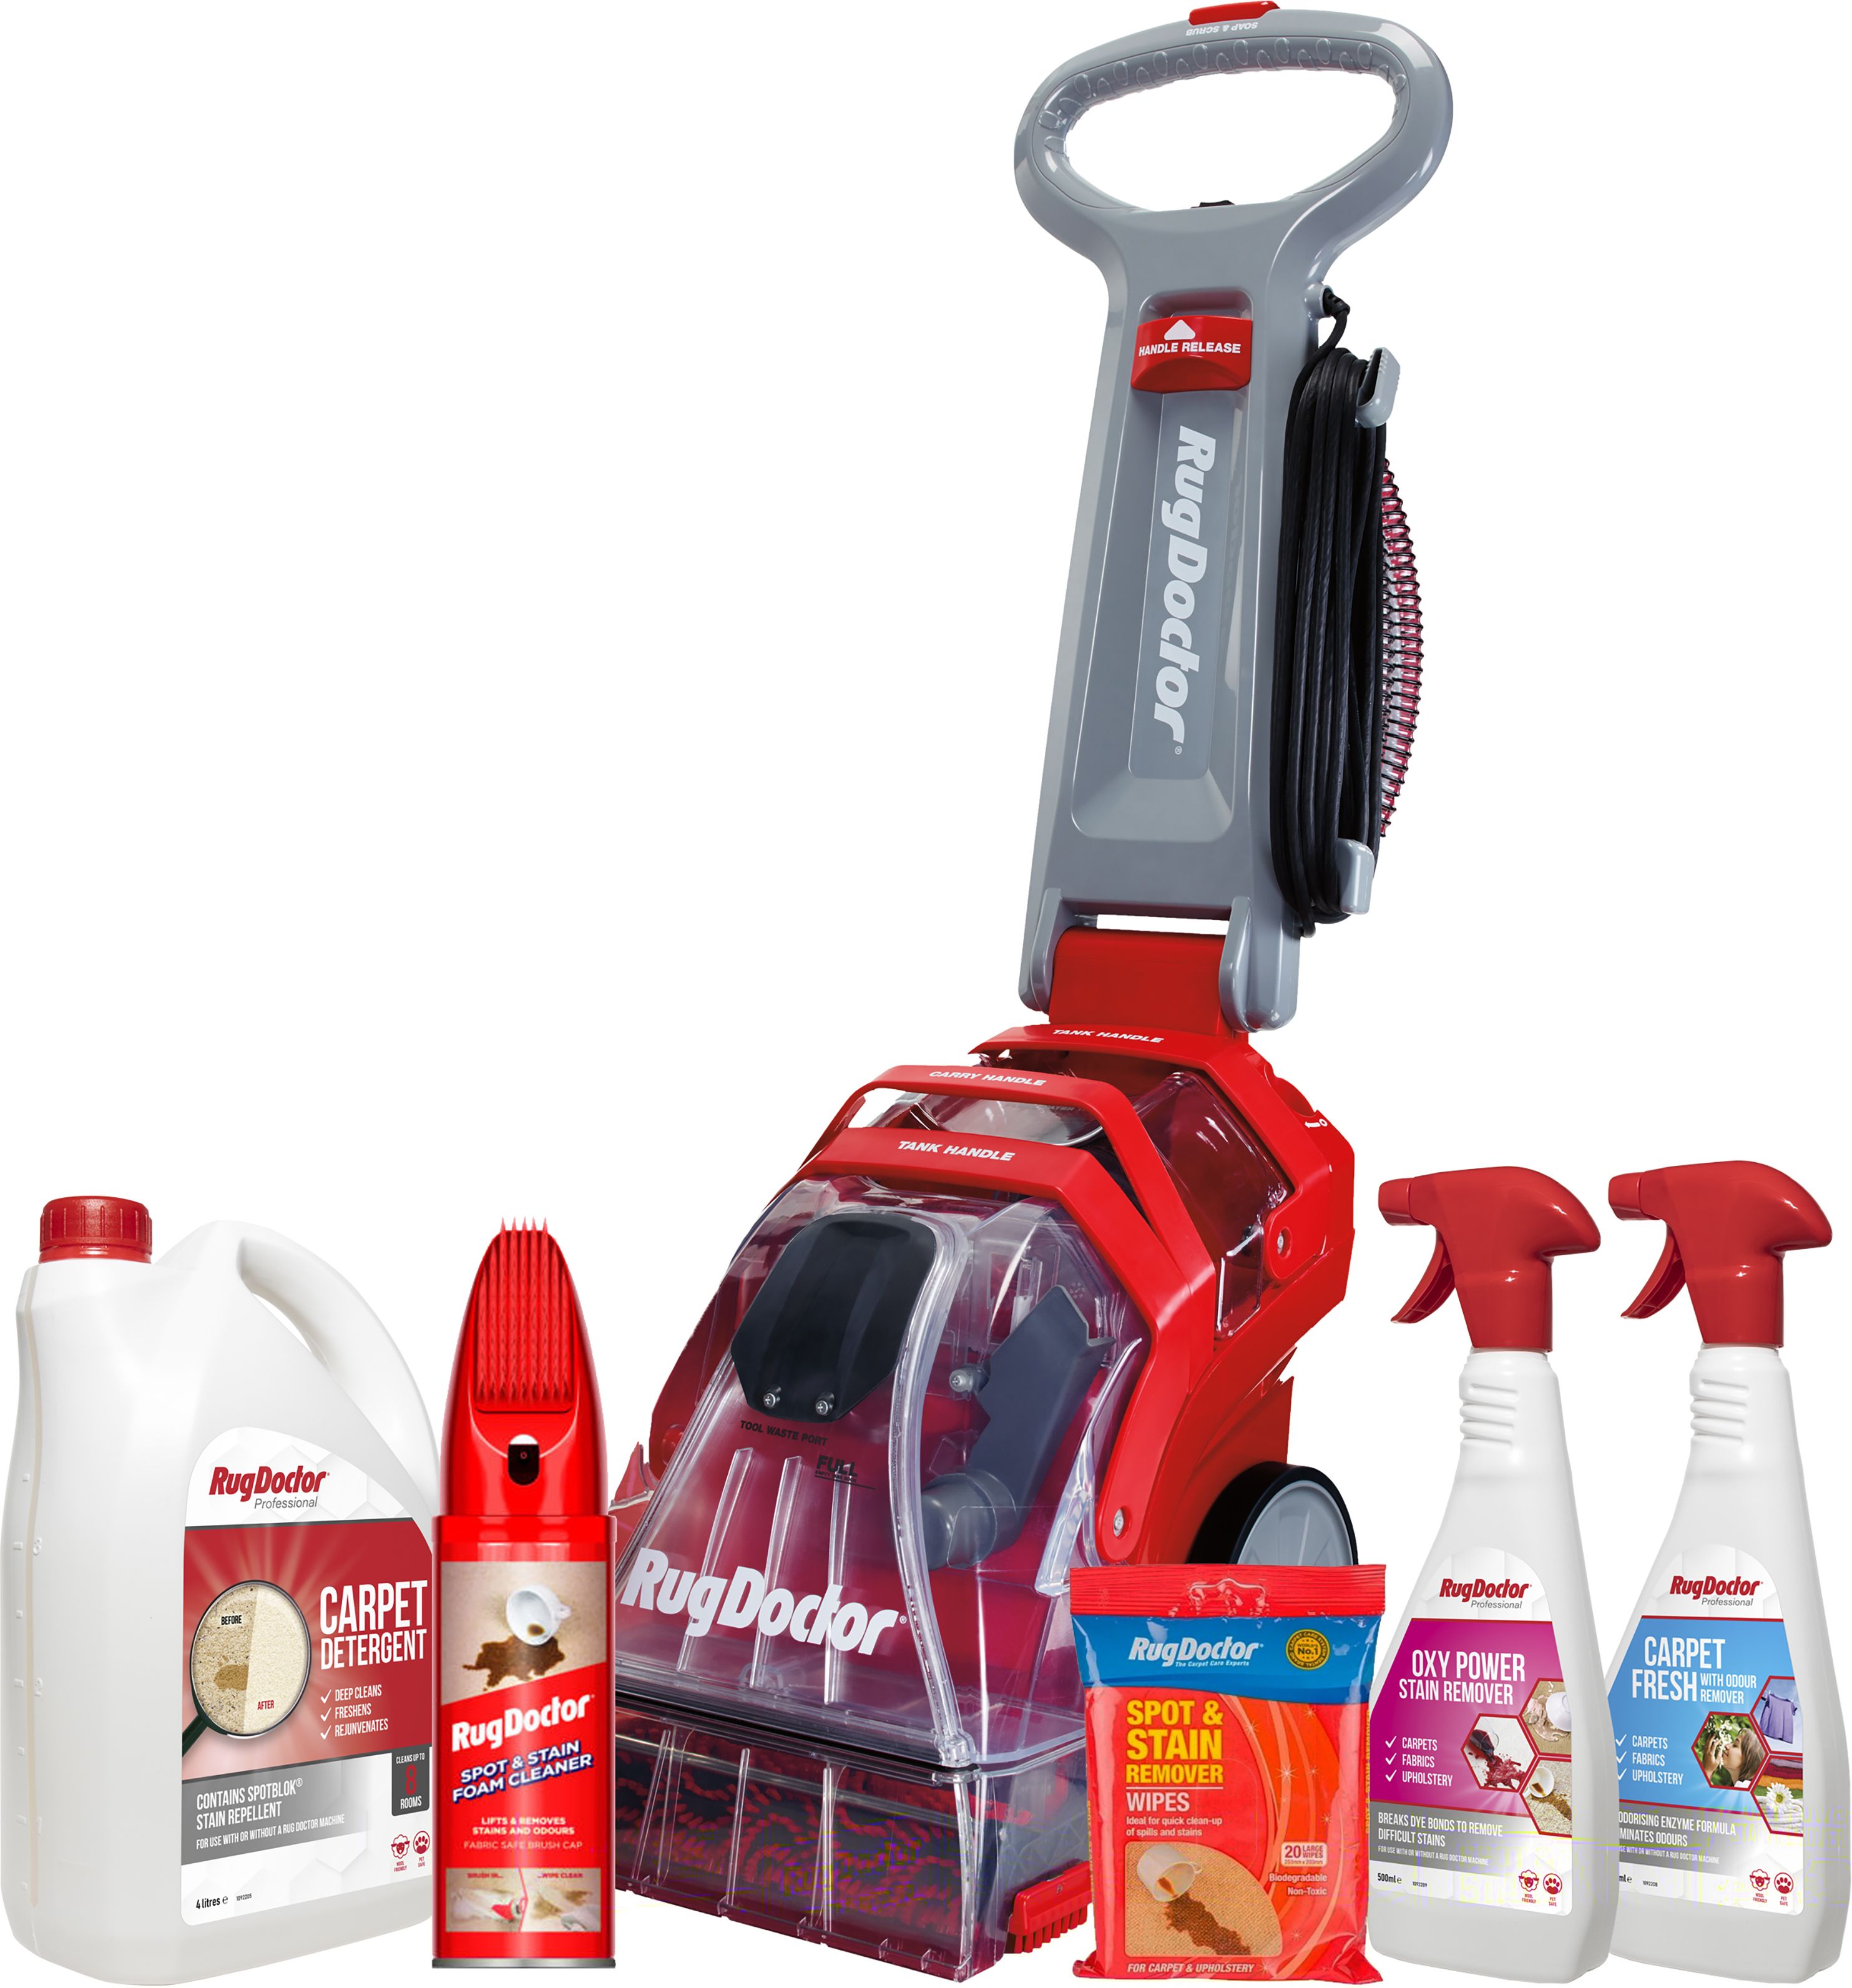 Rug Doctor 1095527 Carpet Cleaner with Tool Kit and Detergent Bundle, Black